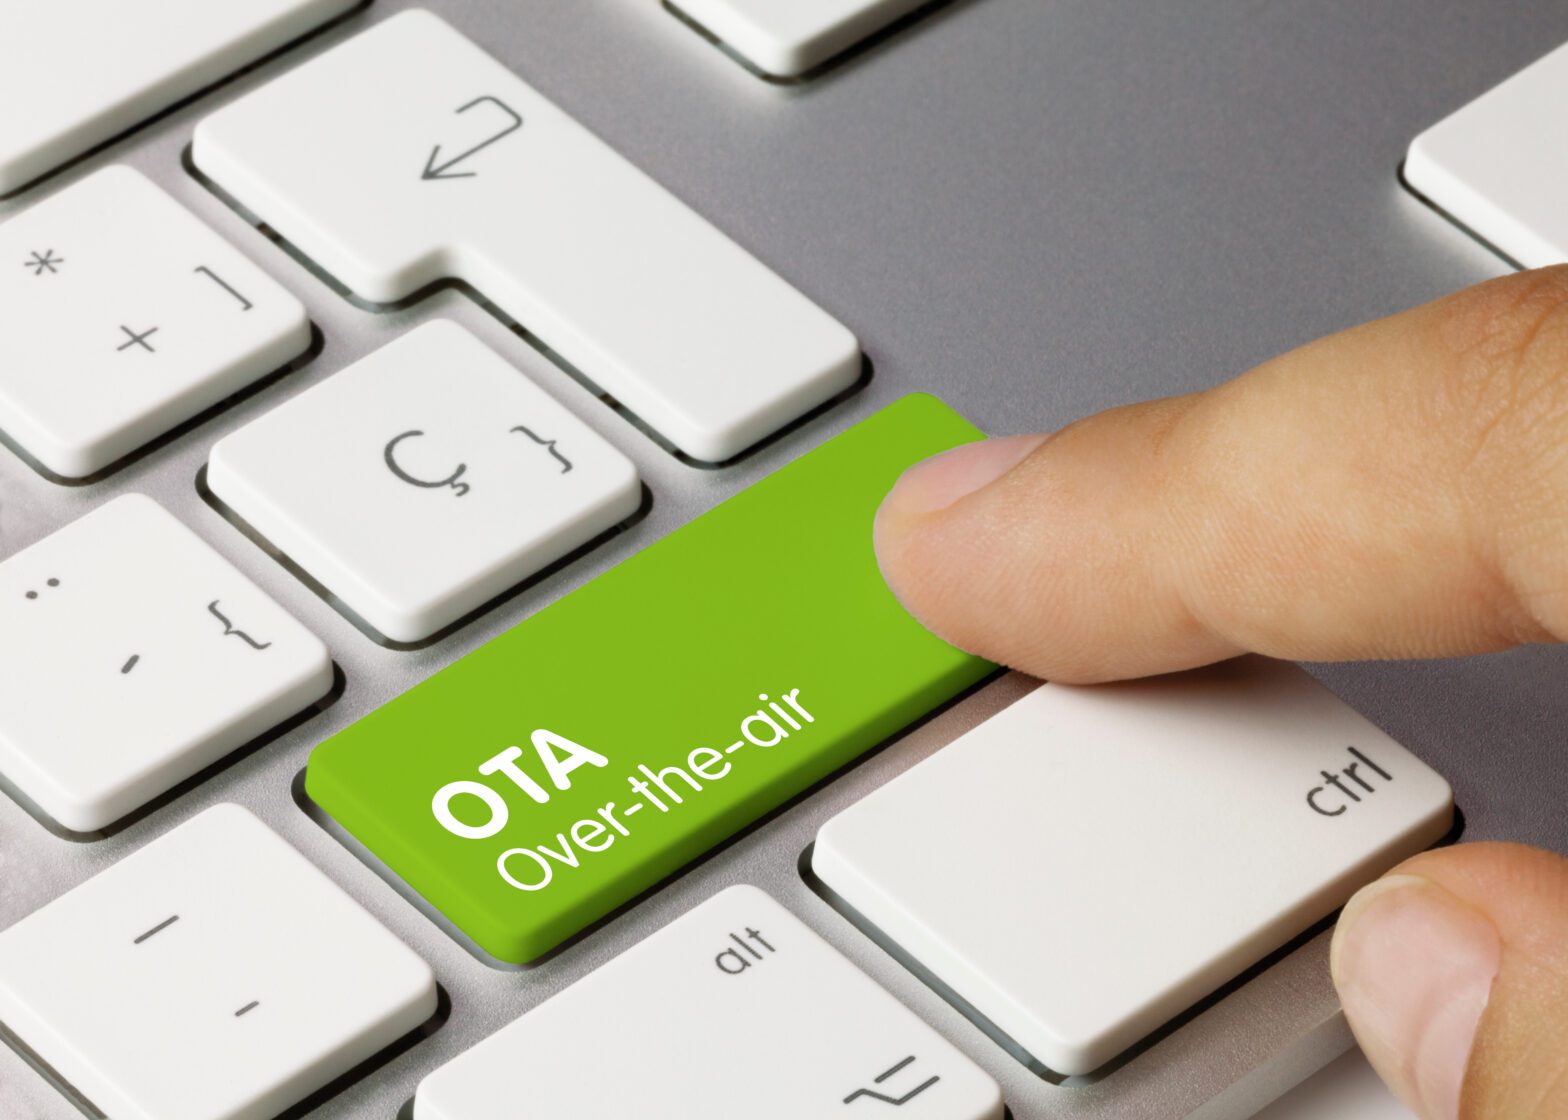 Finger pressing a green OTA advertising key on a computer keyboard.